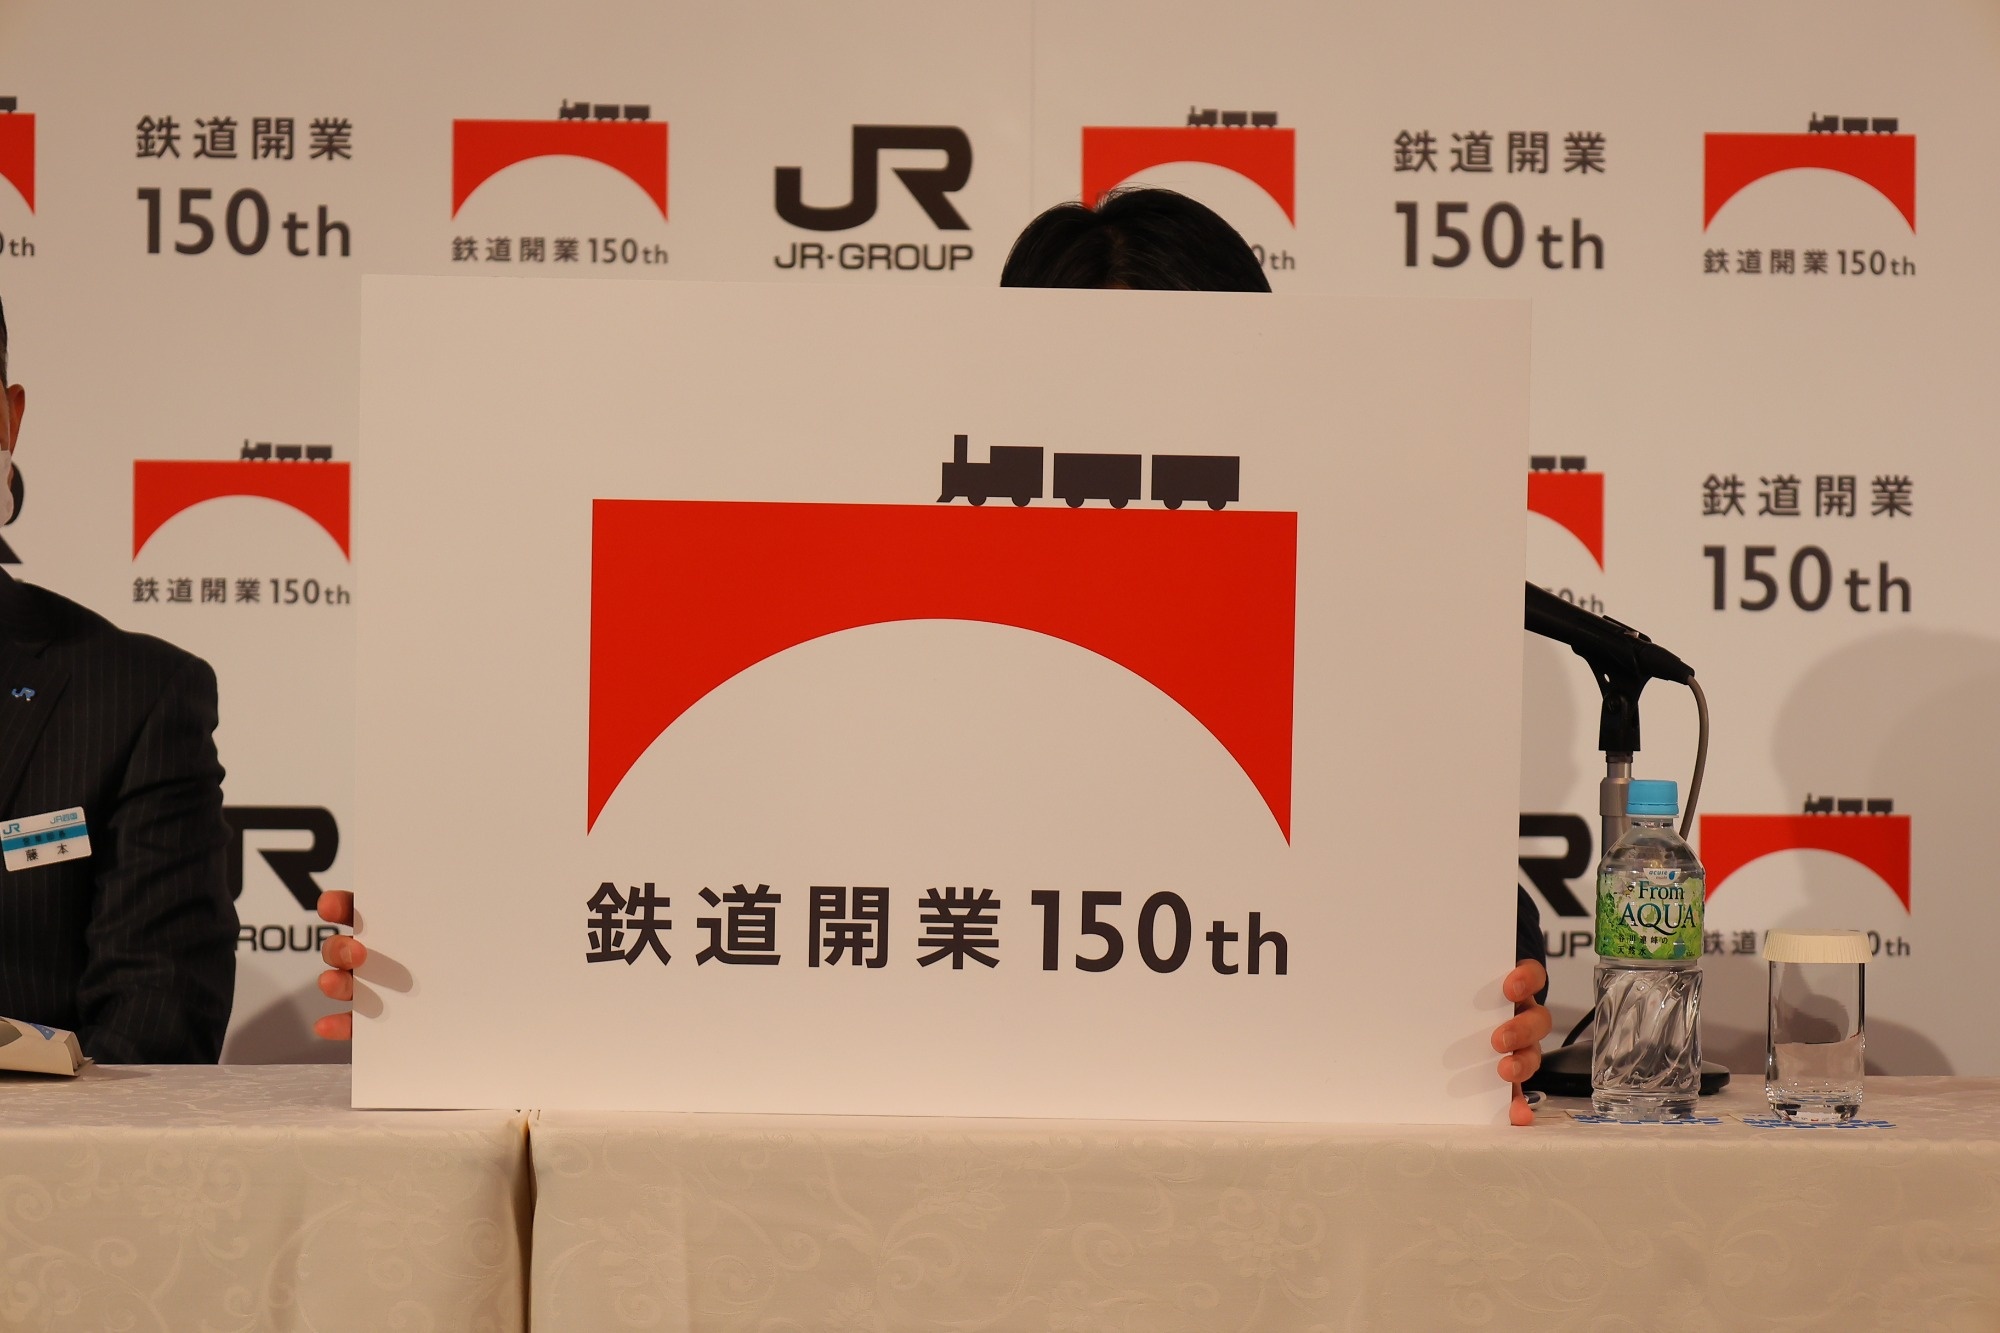 JRグループ、鉄道開業150年キャンペーン実施へ JR全駅入場券は70万円 